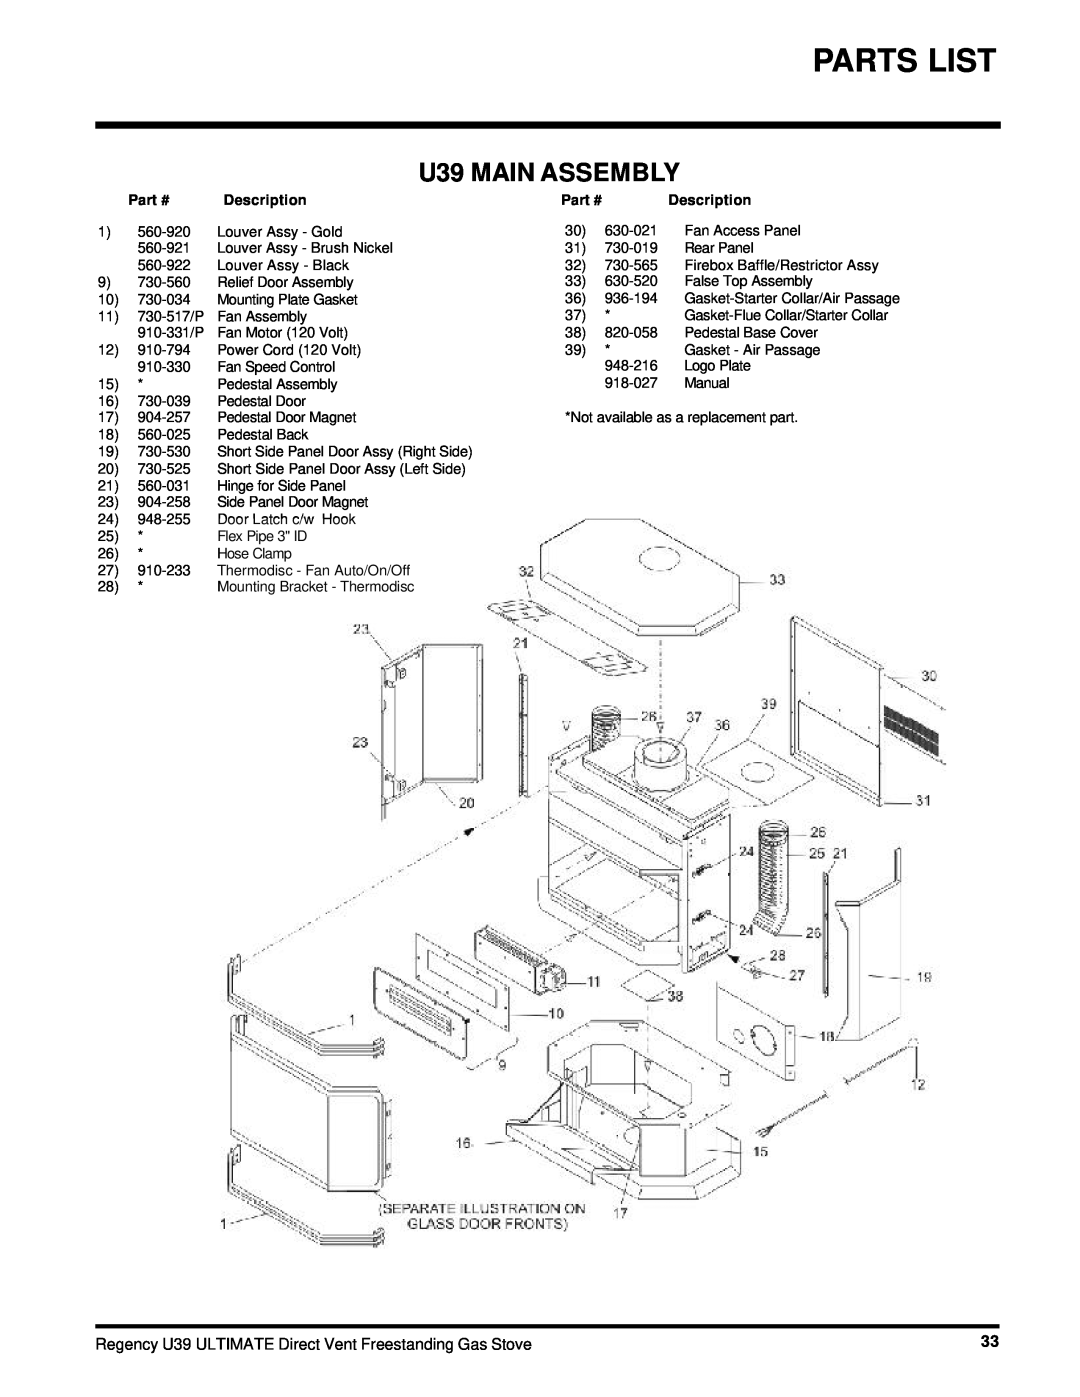 Regency U39-NG, U39-LP installation manual U39 MAIN ASSEMBLY, Part #, Description 